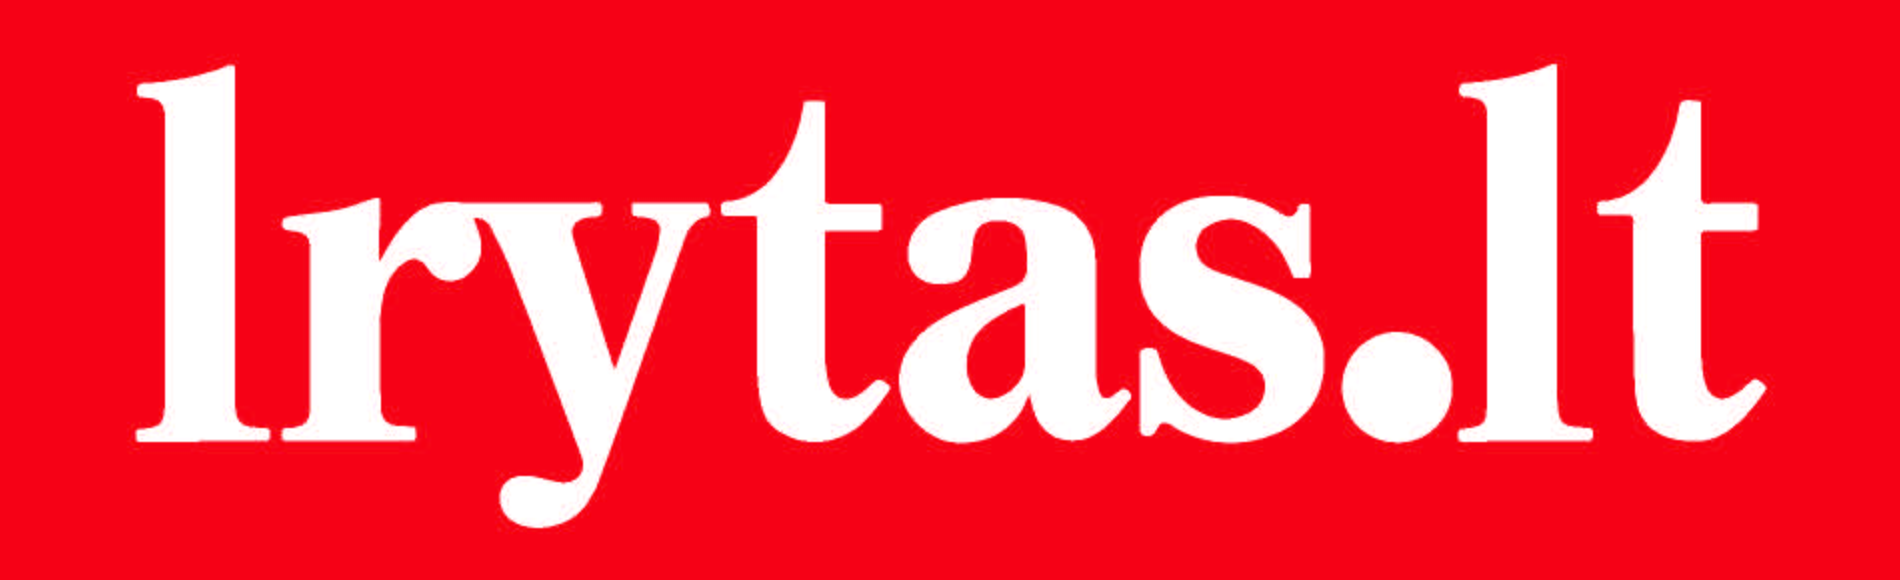 lrytas-logo